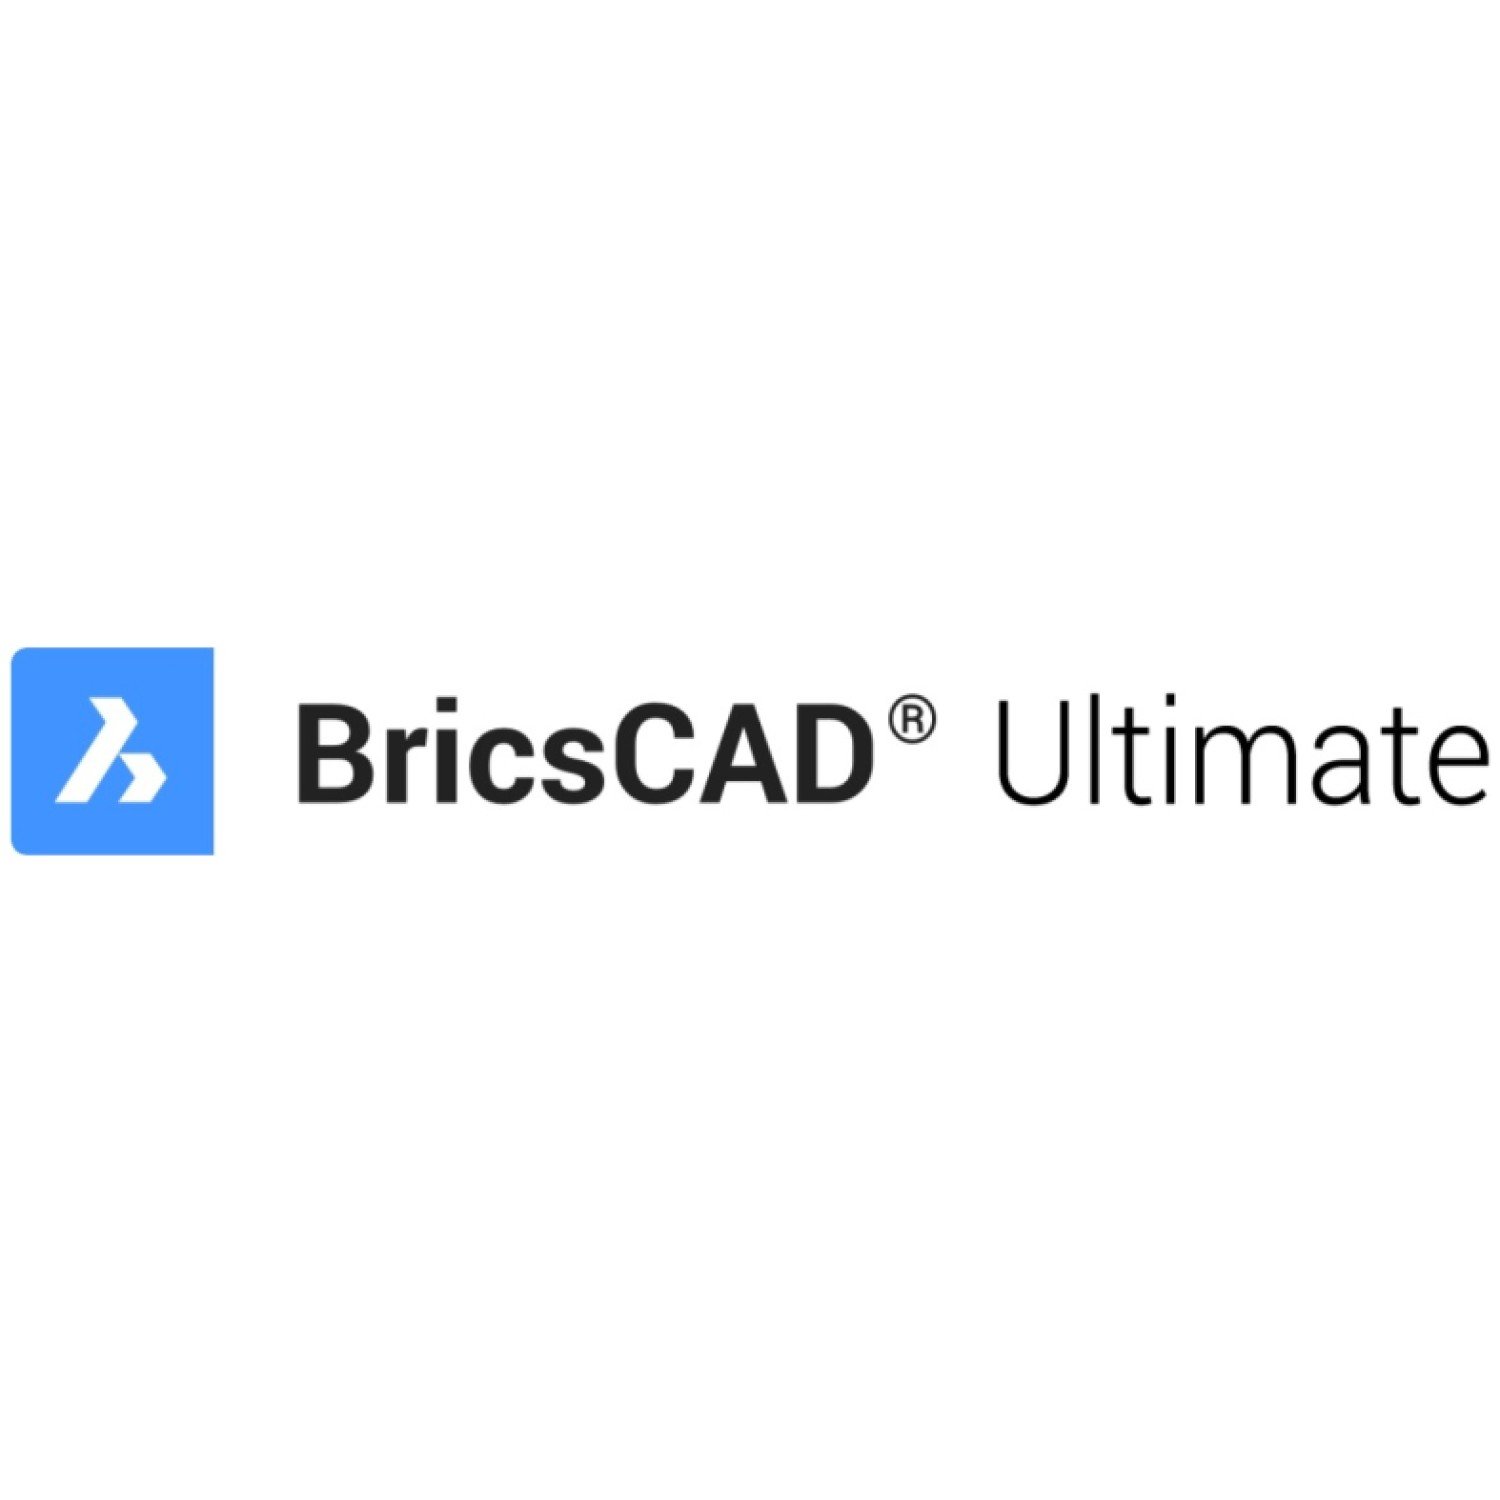 BricsCAD Ultimate 3 Year Subscription single volume